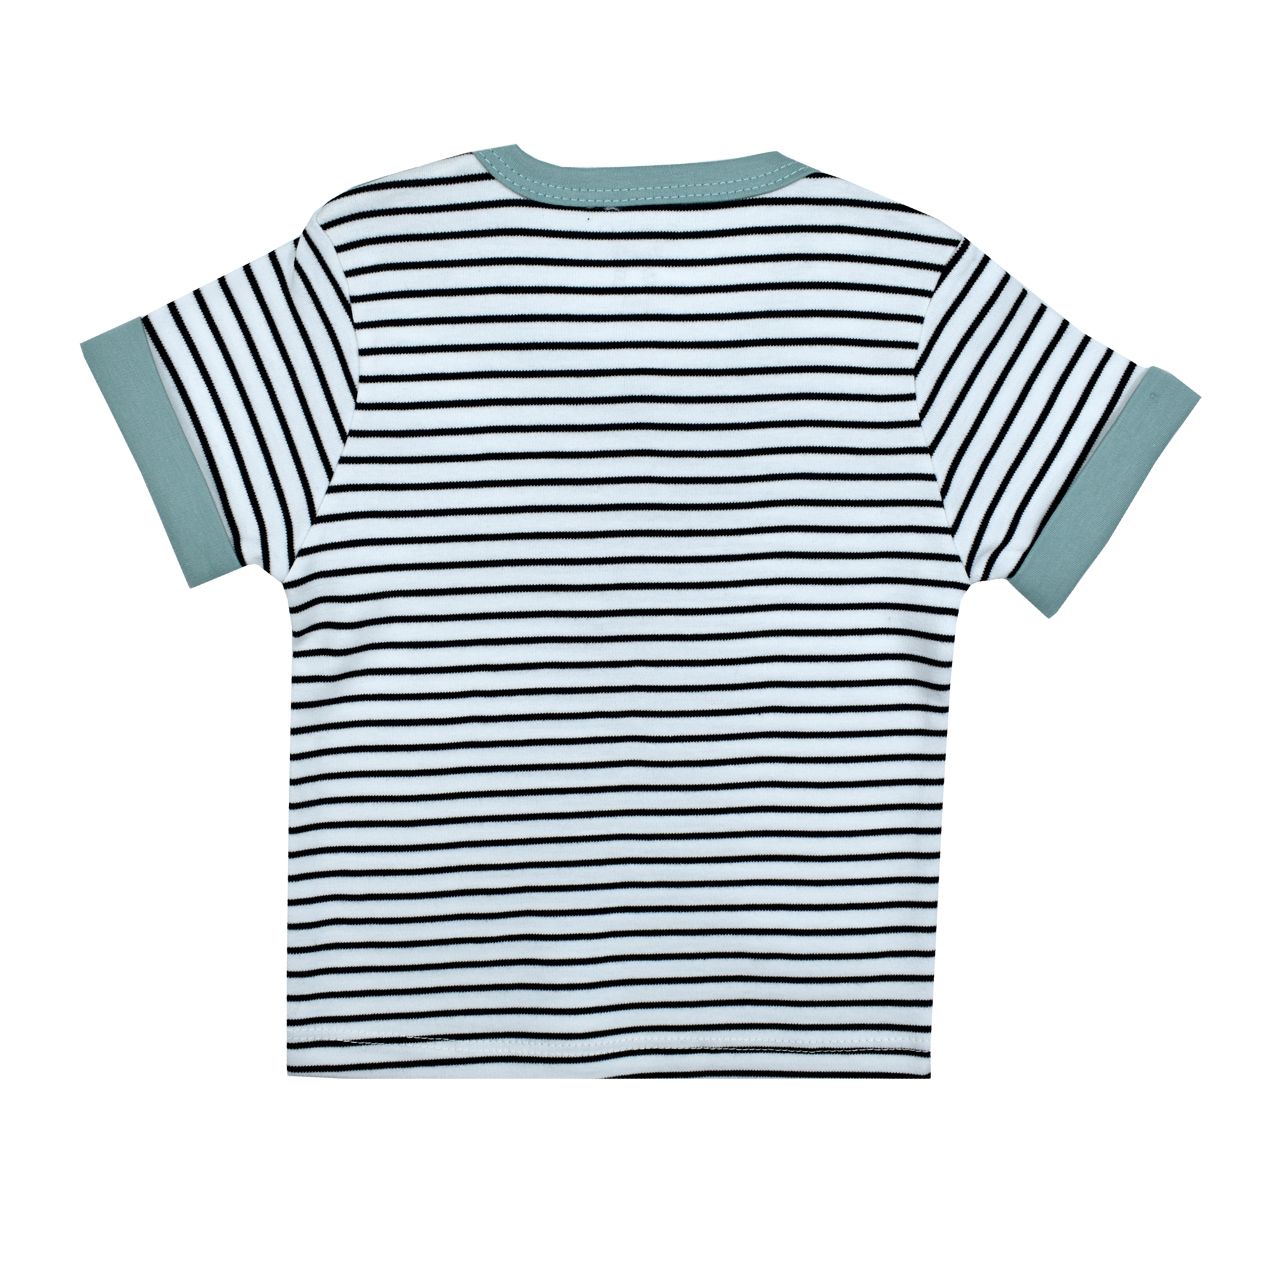 ست تی شرت و شلوار نوزادی اسپیکو مدل رافائل کد 2 -  - 3